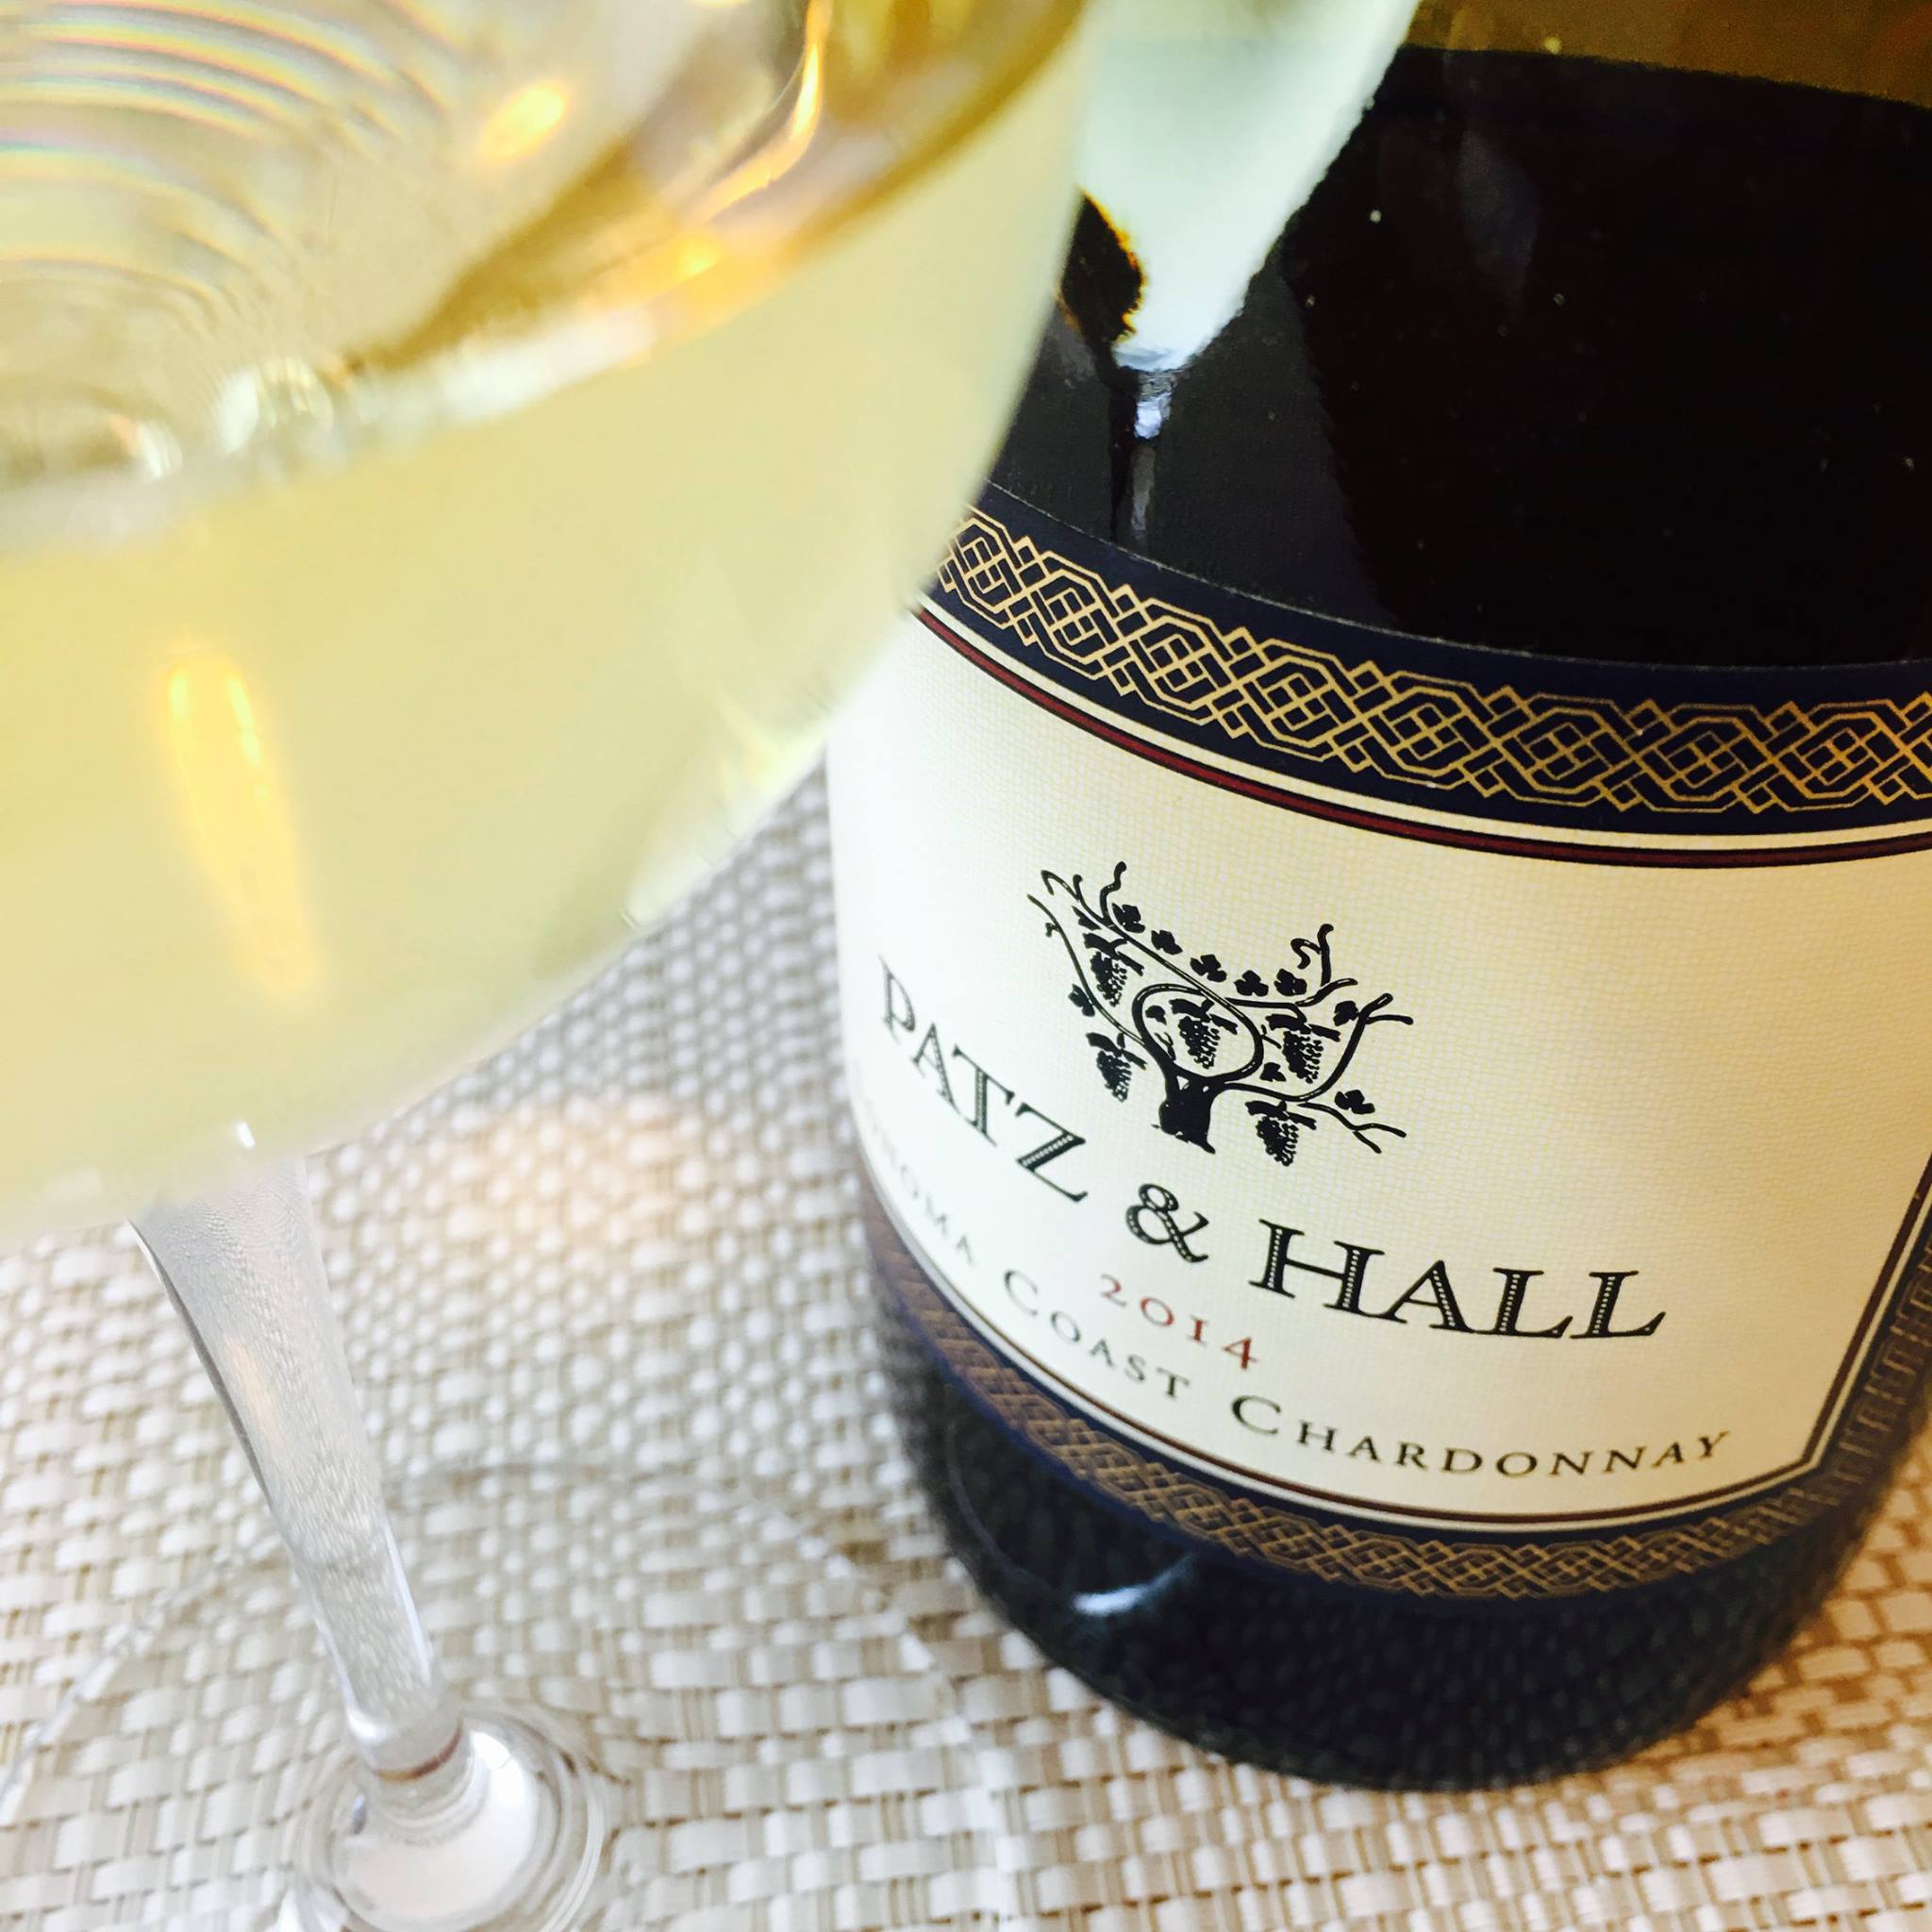 2013 Patz & Hall Chardonnay Hyde Vineyard Carneros, Napa Valley